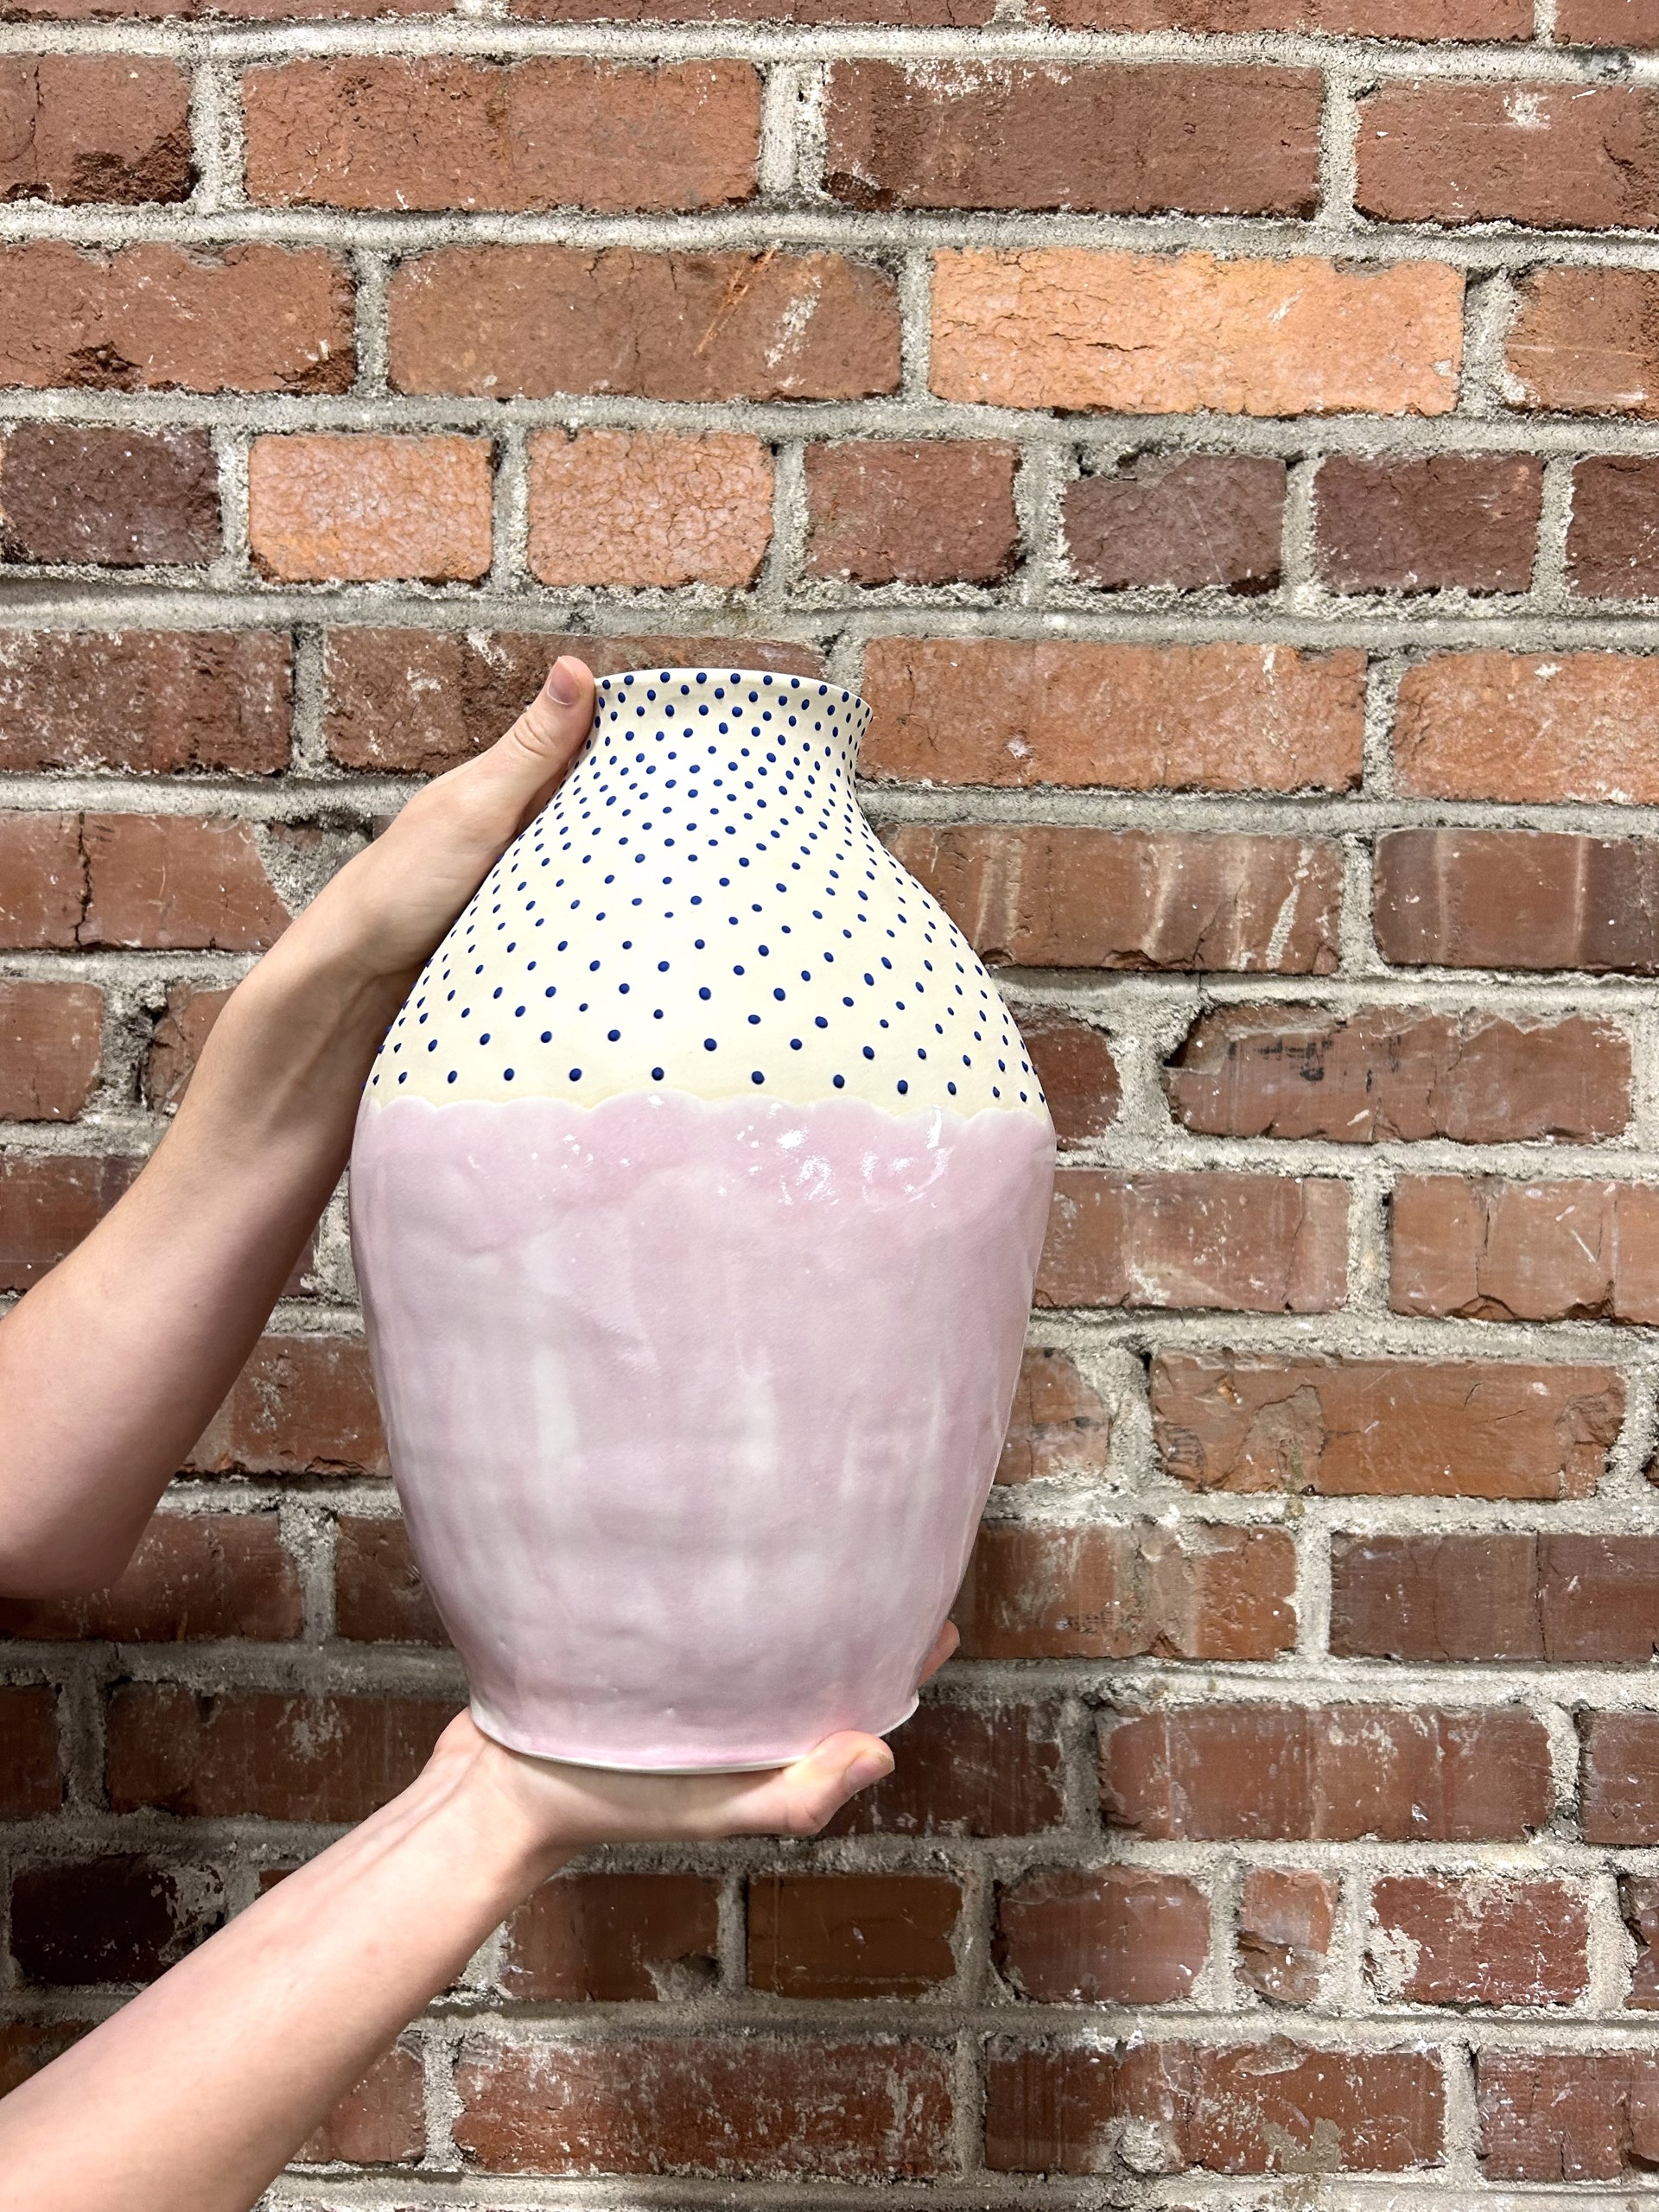 Scallop Vase by Sam Shamard